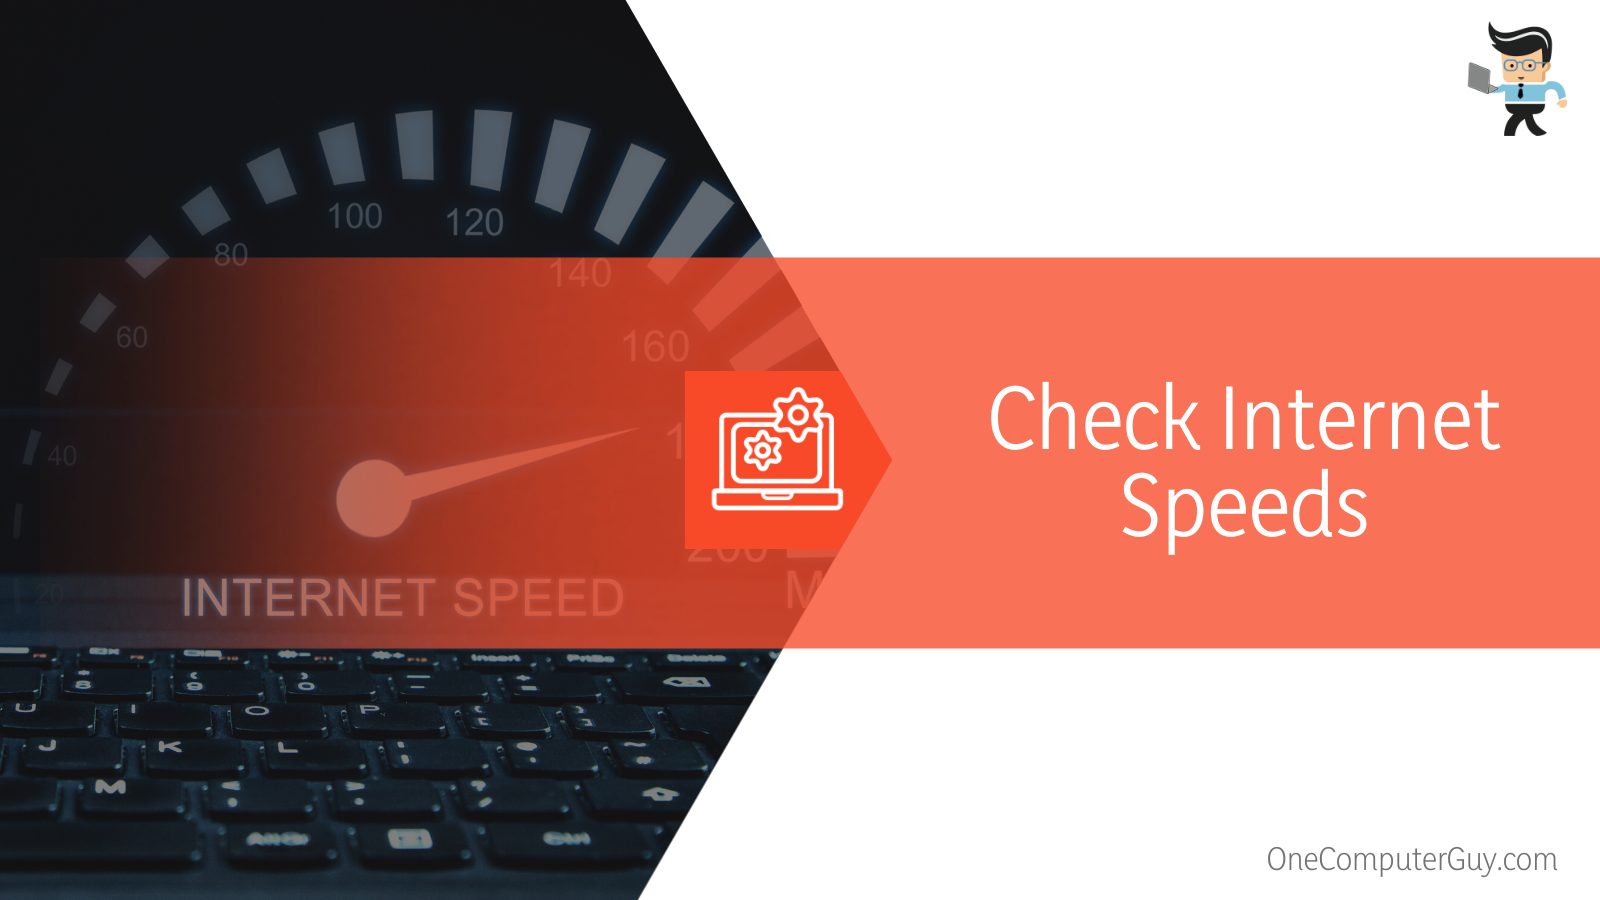 Check Internet Speeds